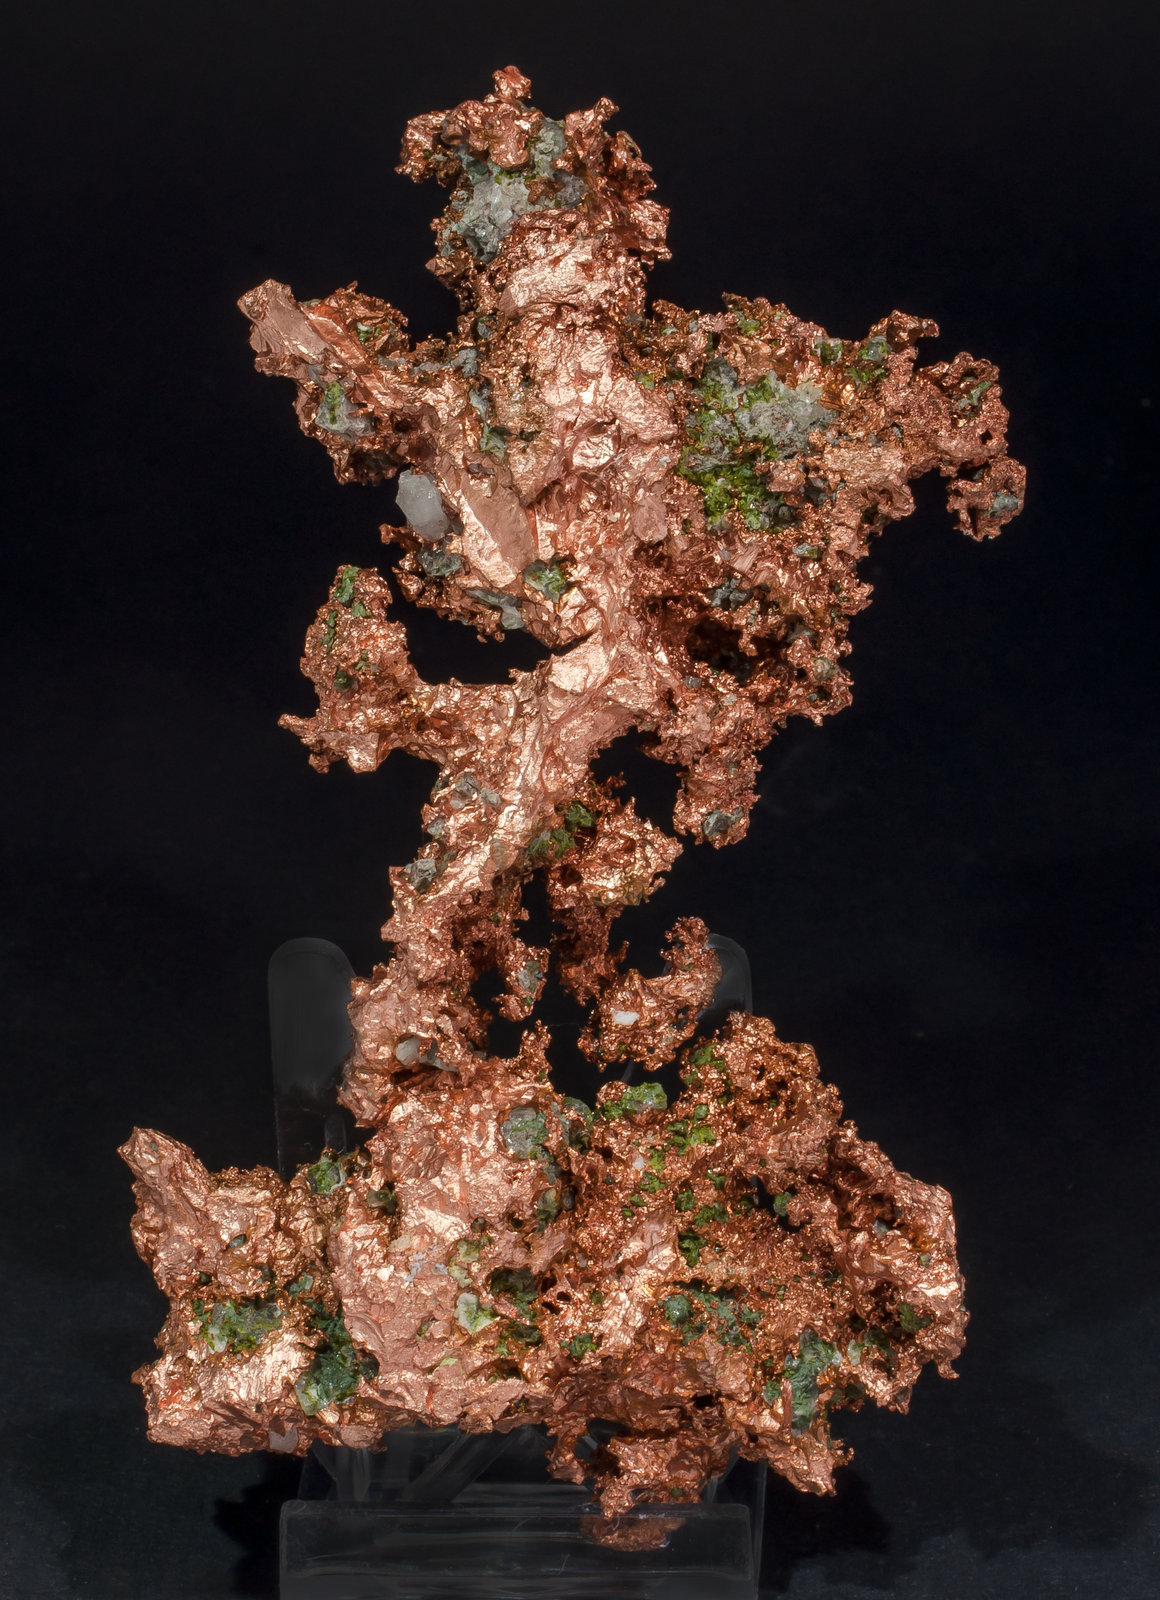 specimens/s_imagesAM2/Copper-DF96AM2f.jpg